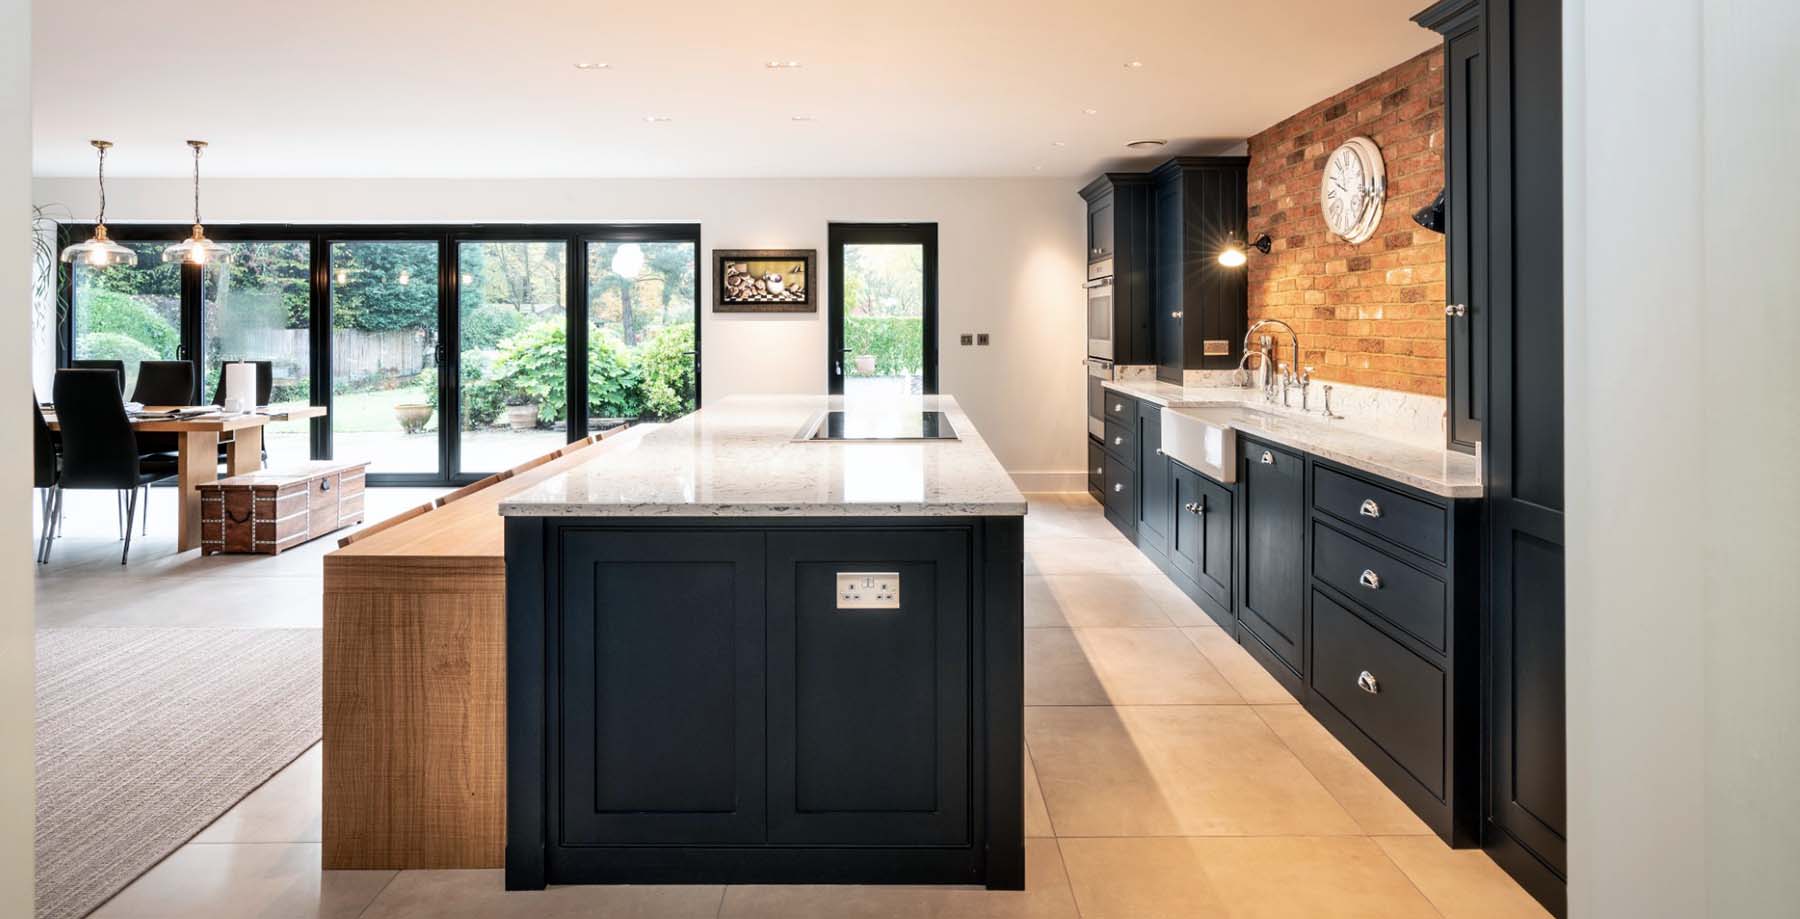 kitchen design with black cabinets white countertops red brick backsplash